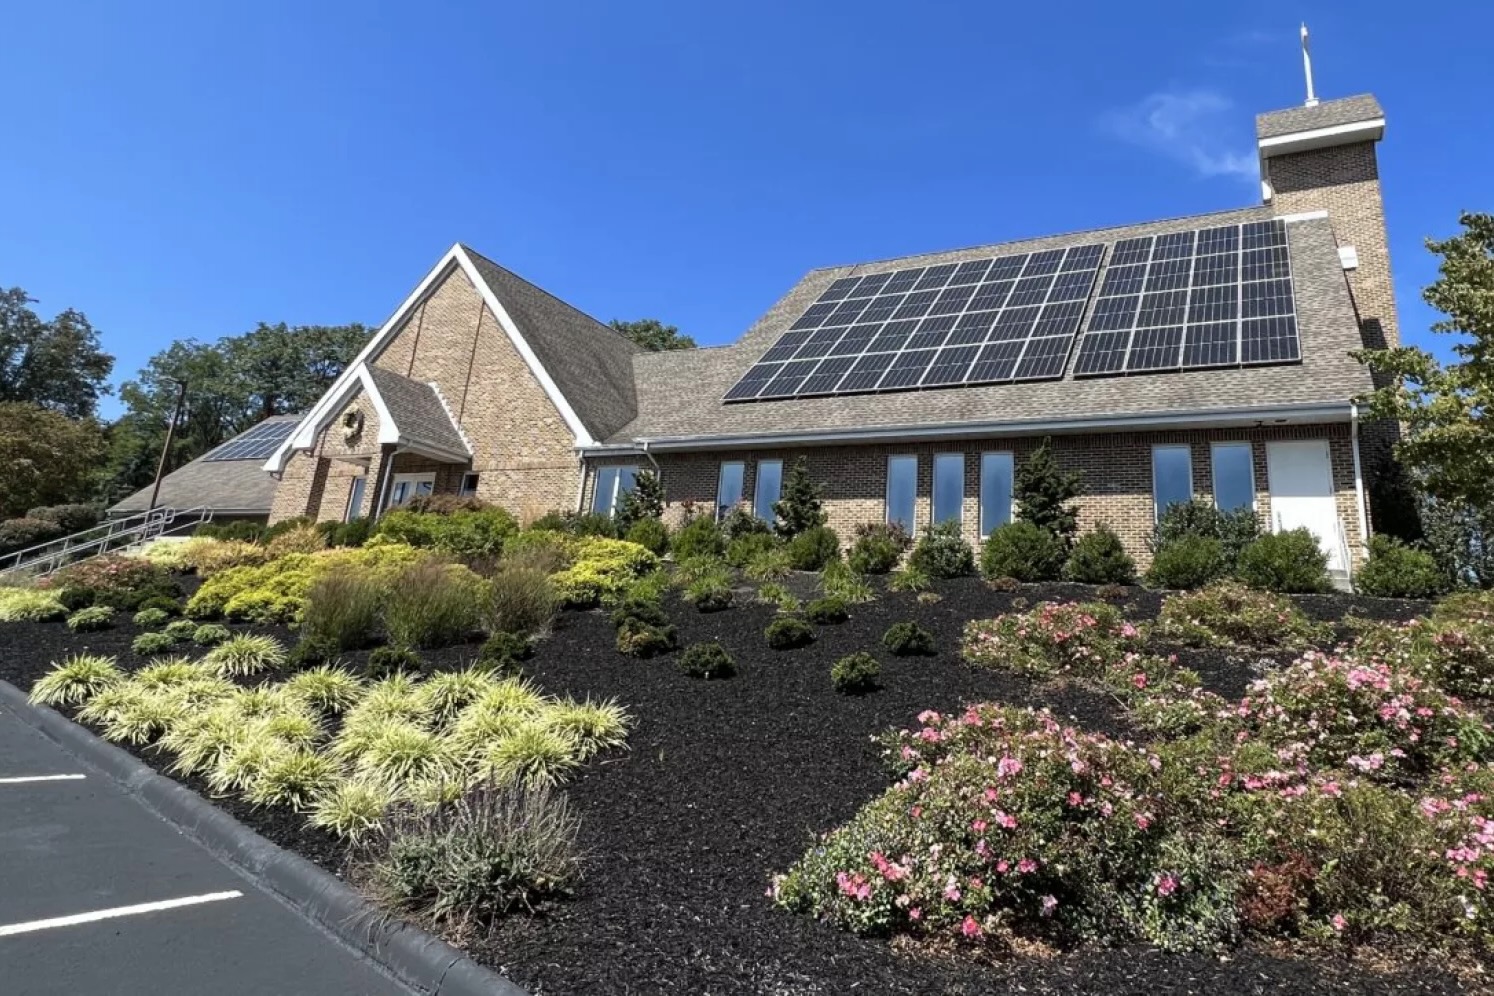 A church with solar panels